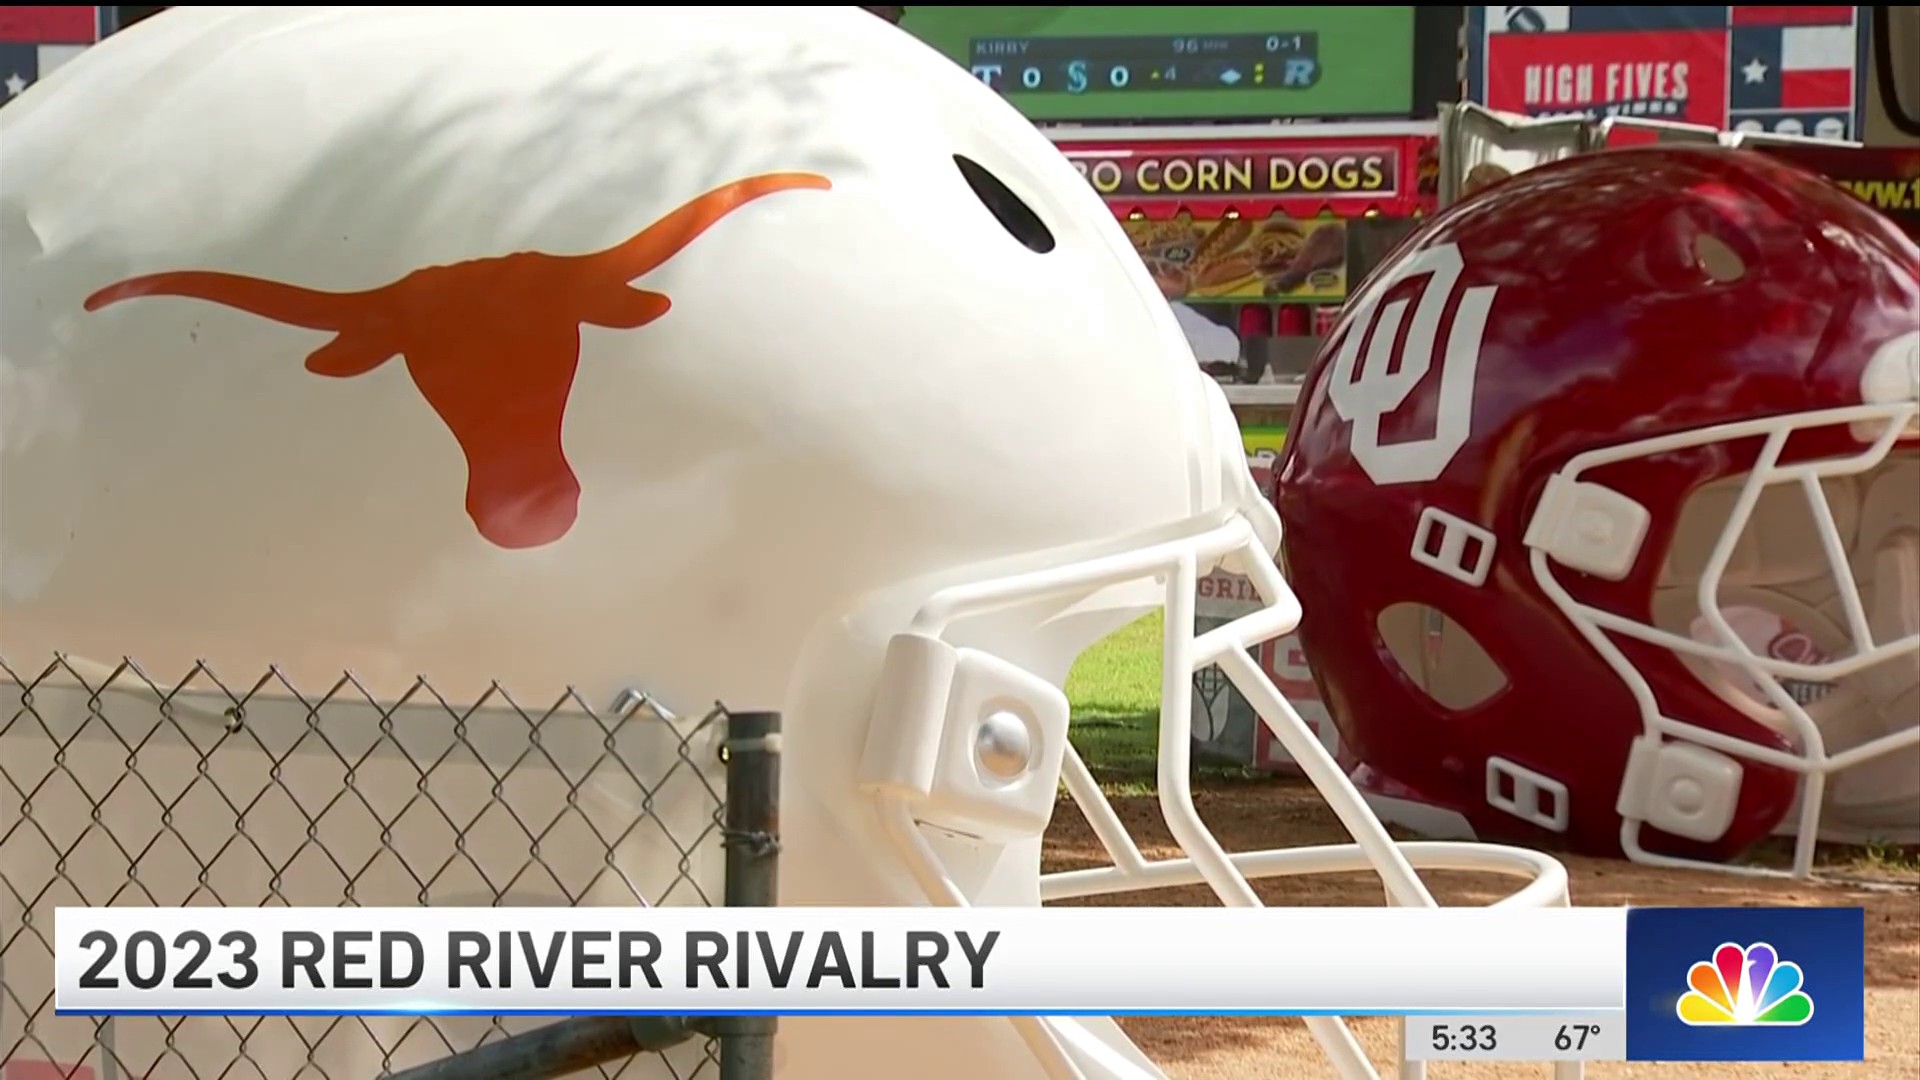 Red River Rivalry: Texas - Oklahoma baseball series to Globe Life